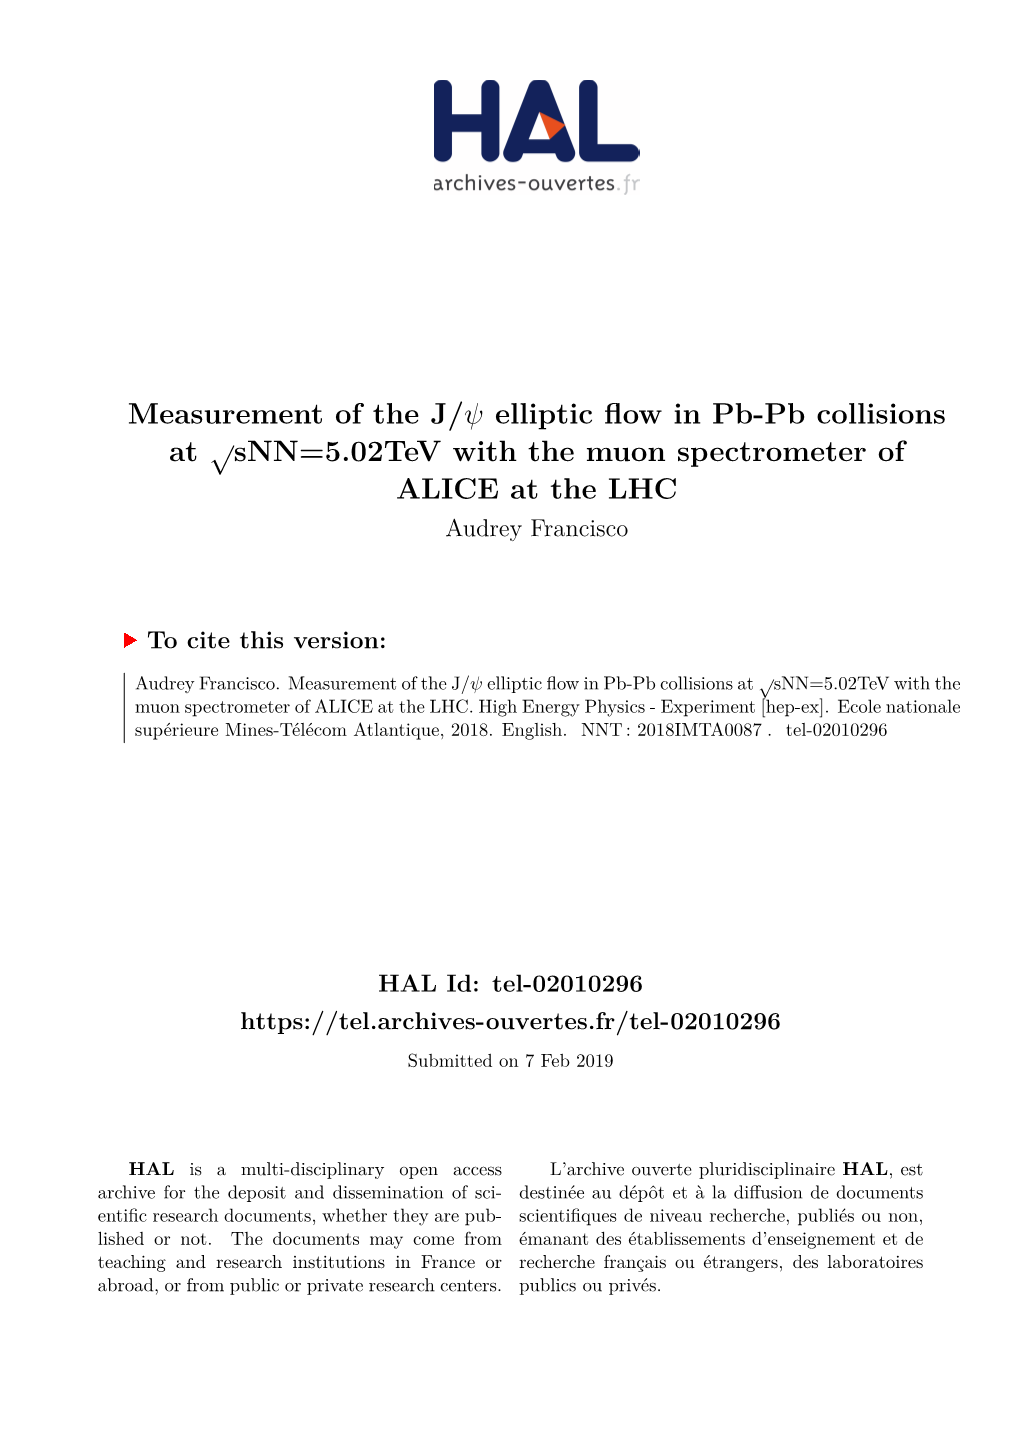 Measurement of the J/ Elliptic Flow in Pb-Pb Collisions at Snn=5.02Tev